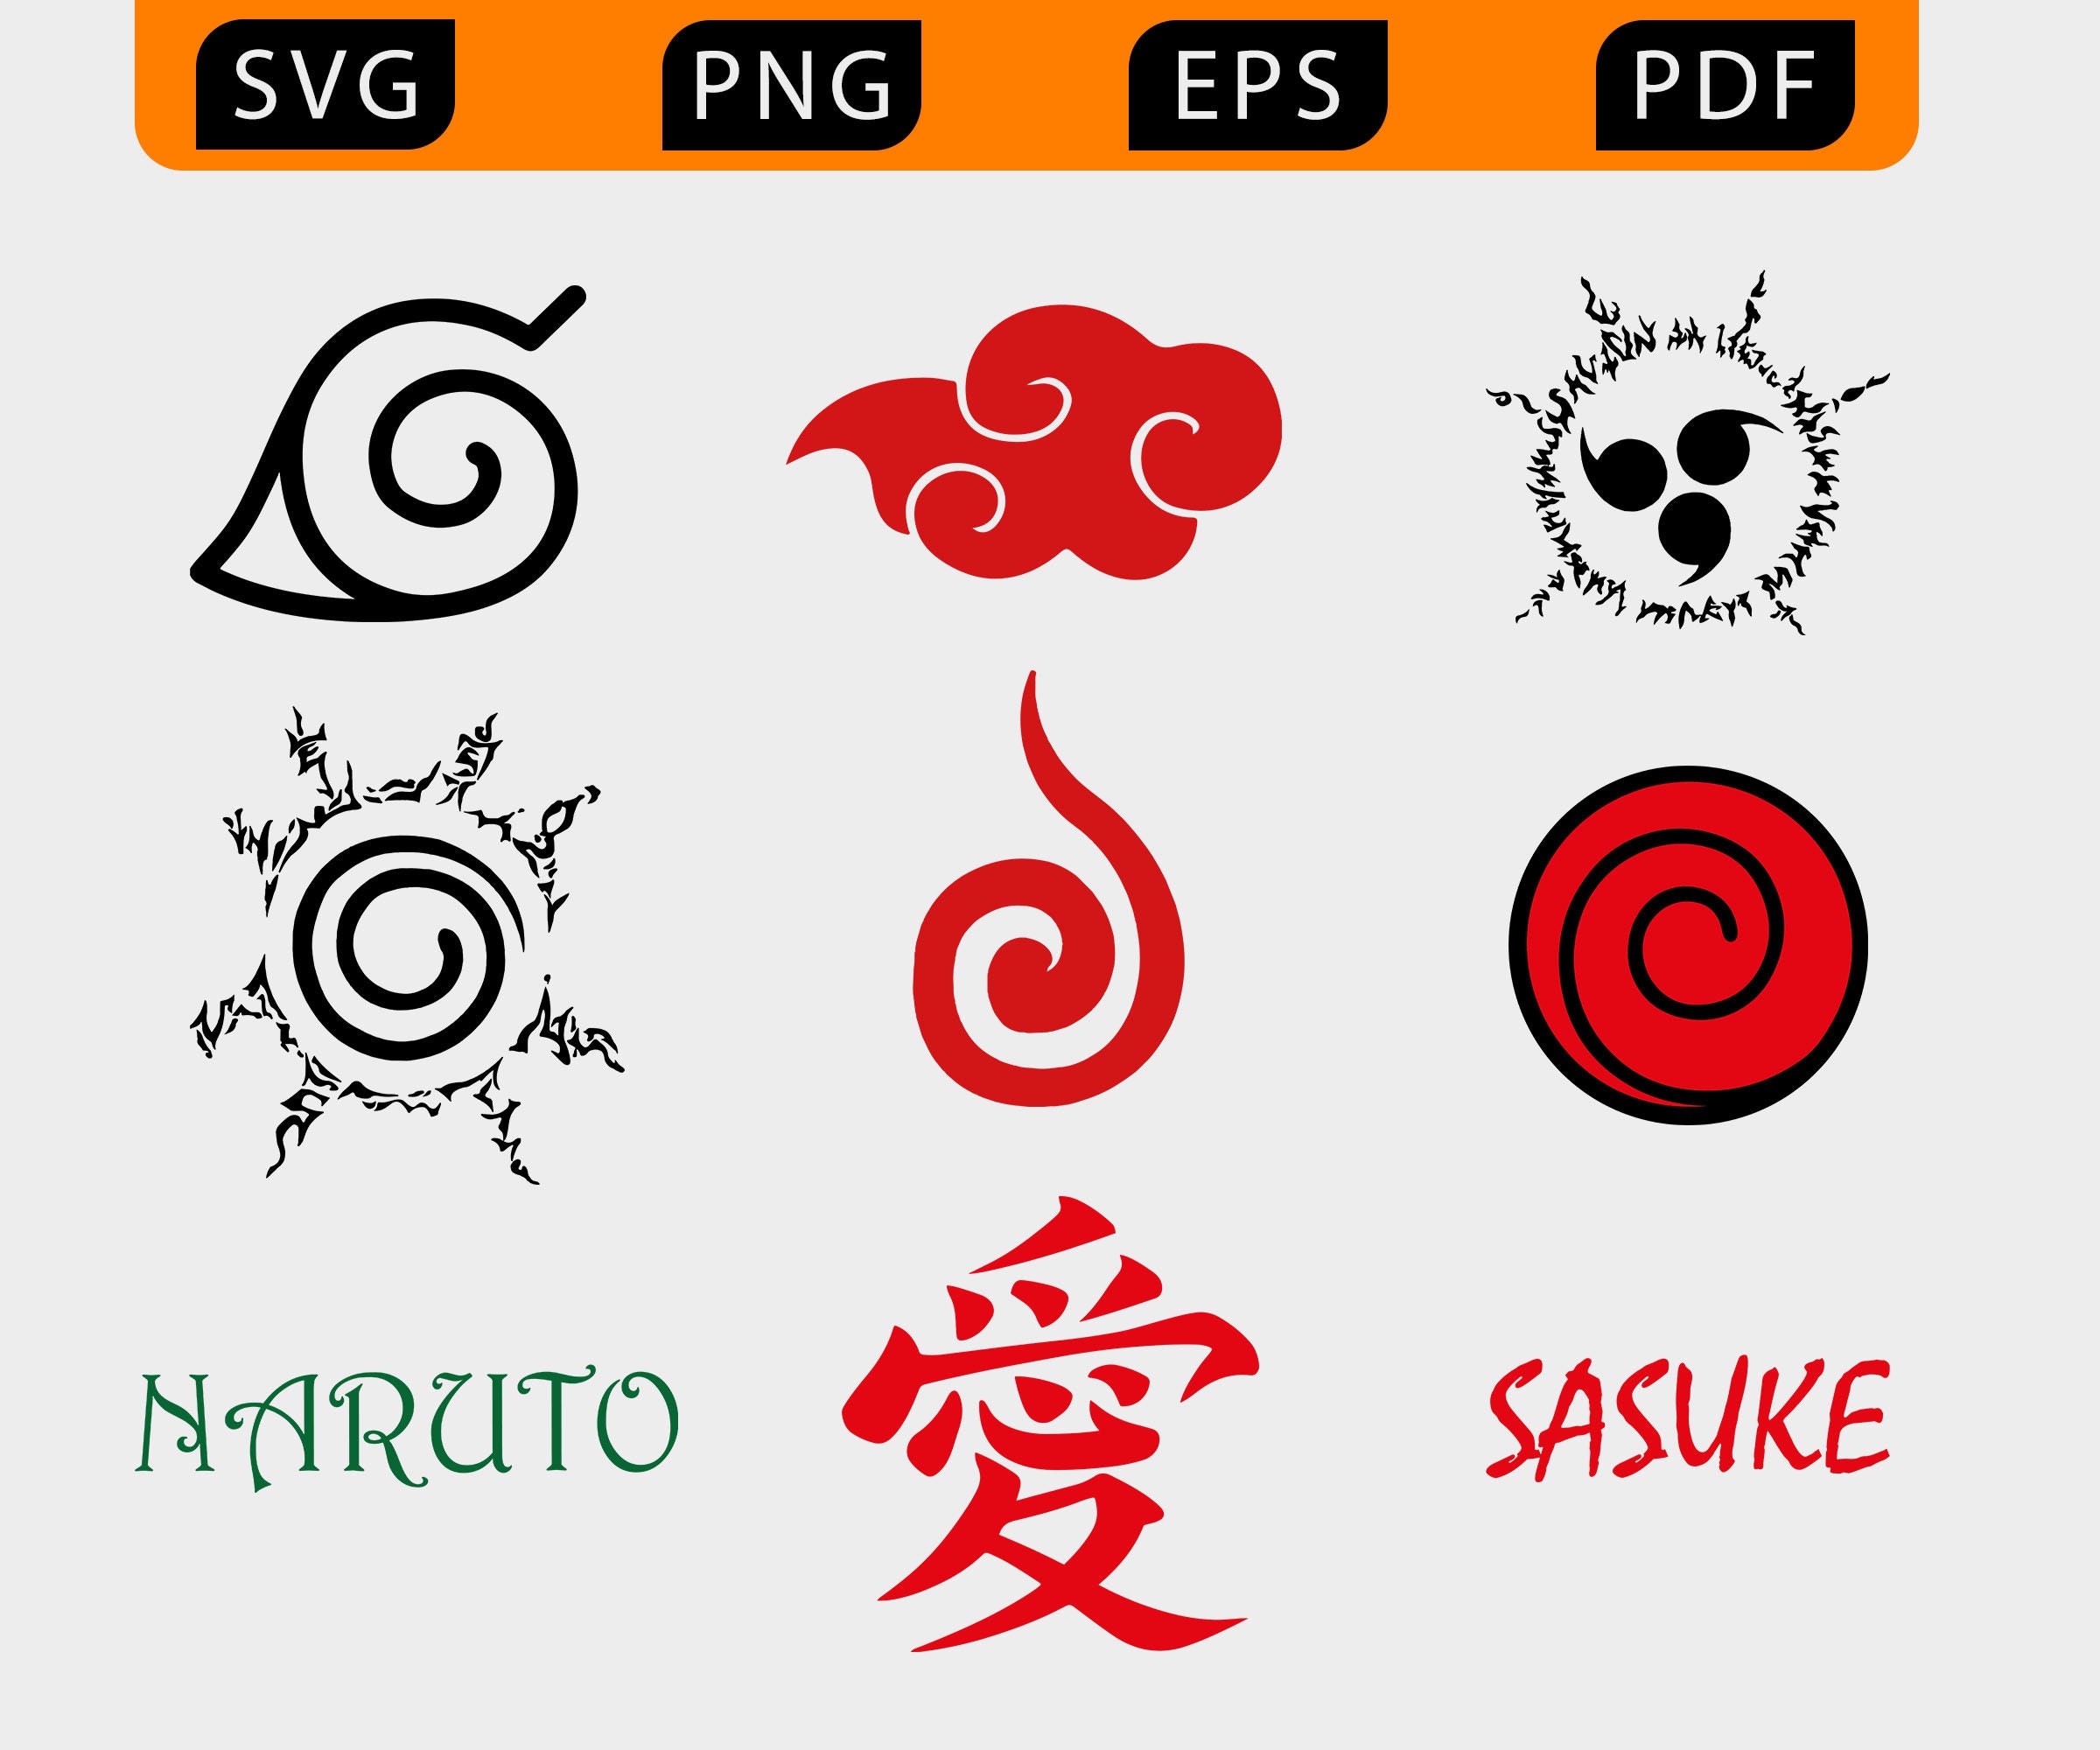 Naruto Classic Sasuke Sharingan Symbol Boy's Red T-shirt-XS